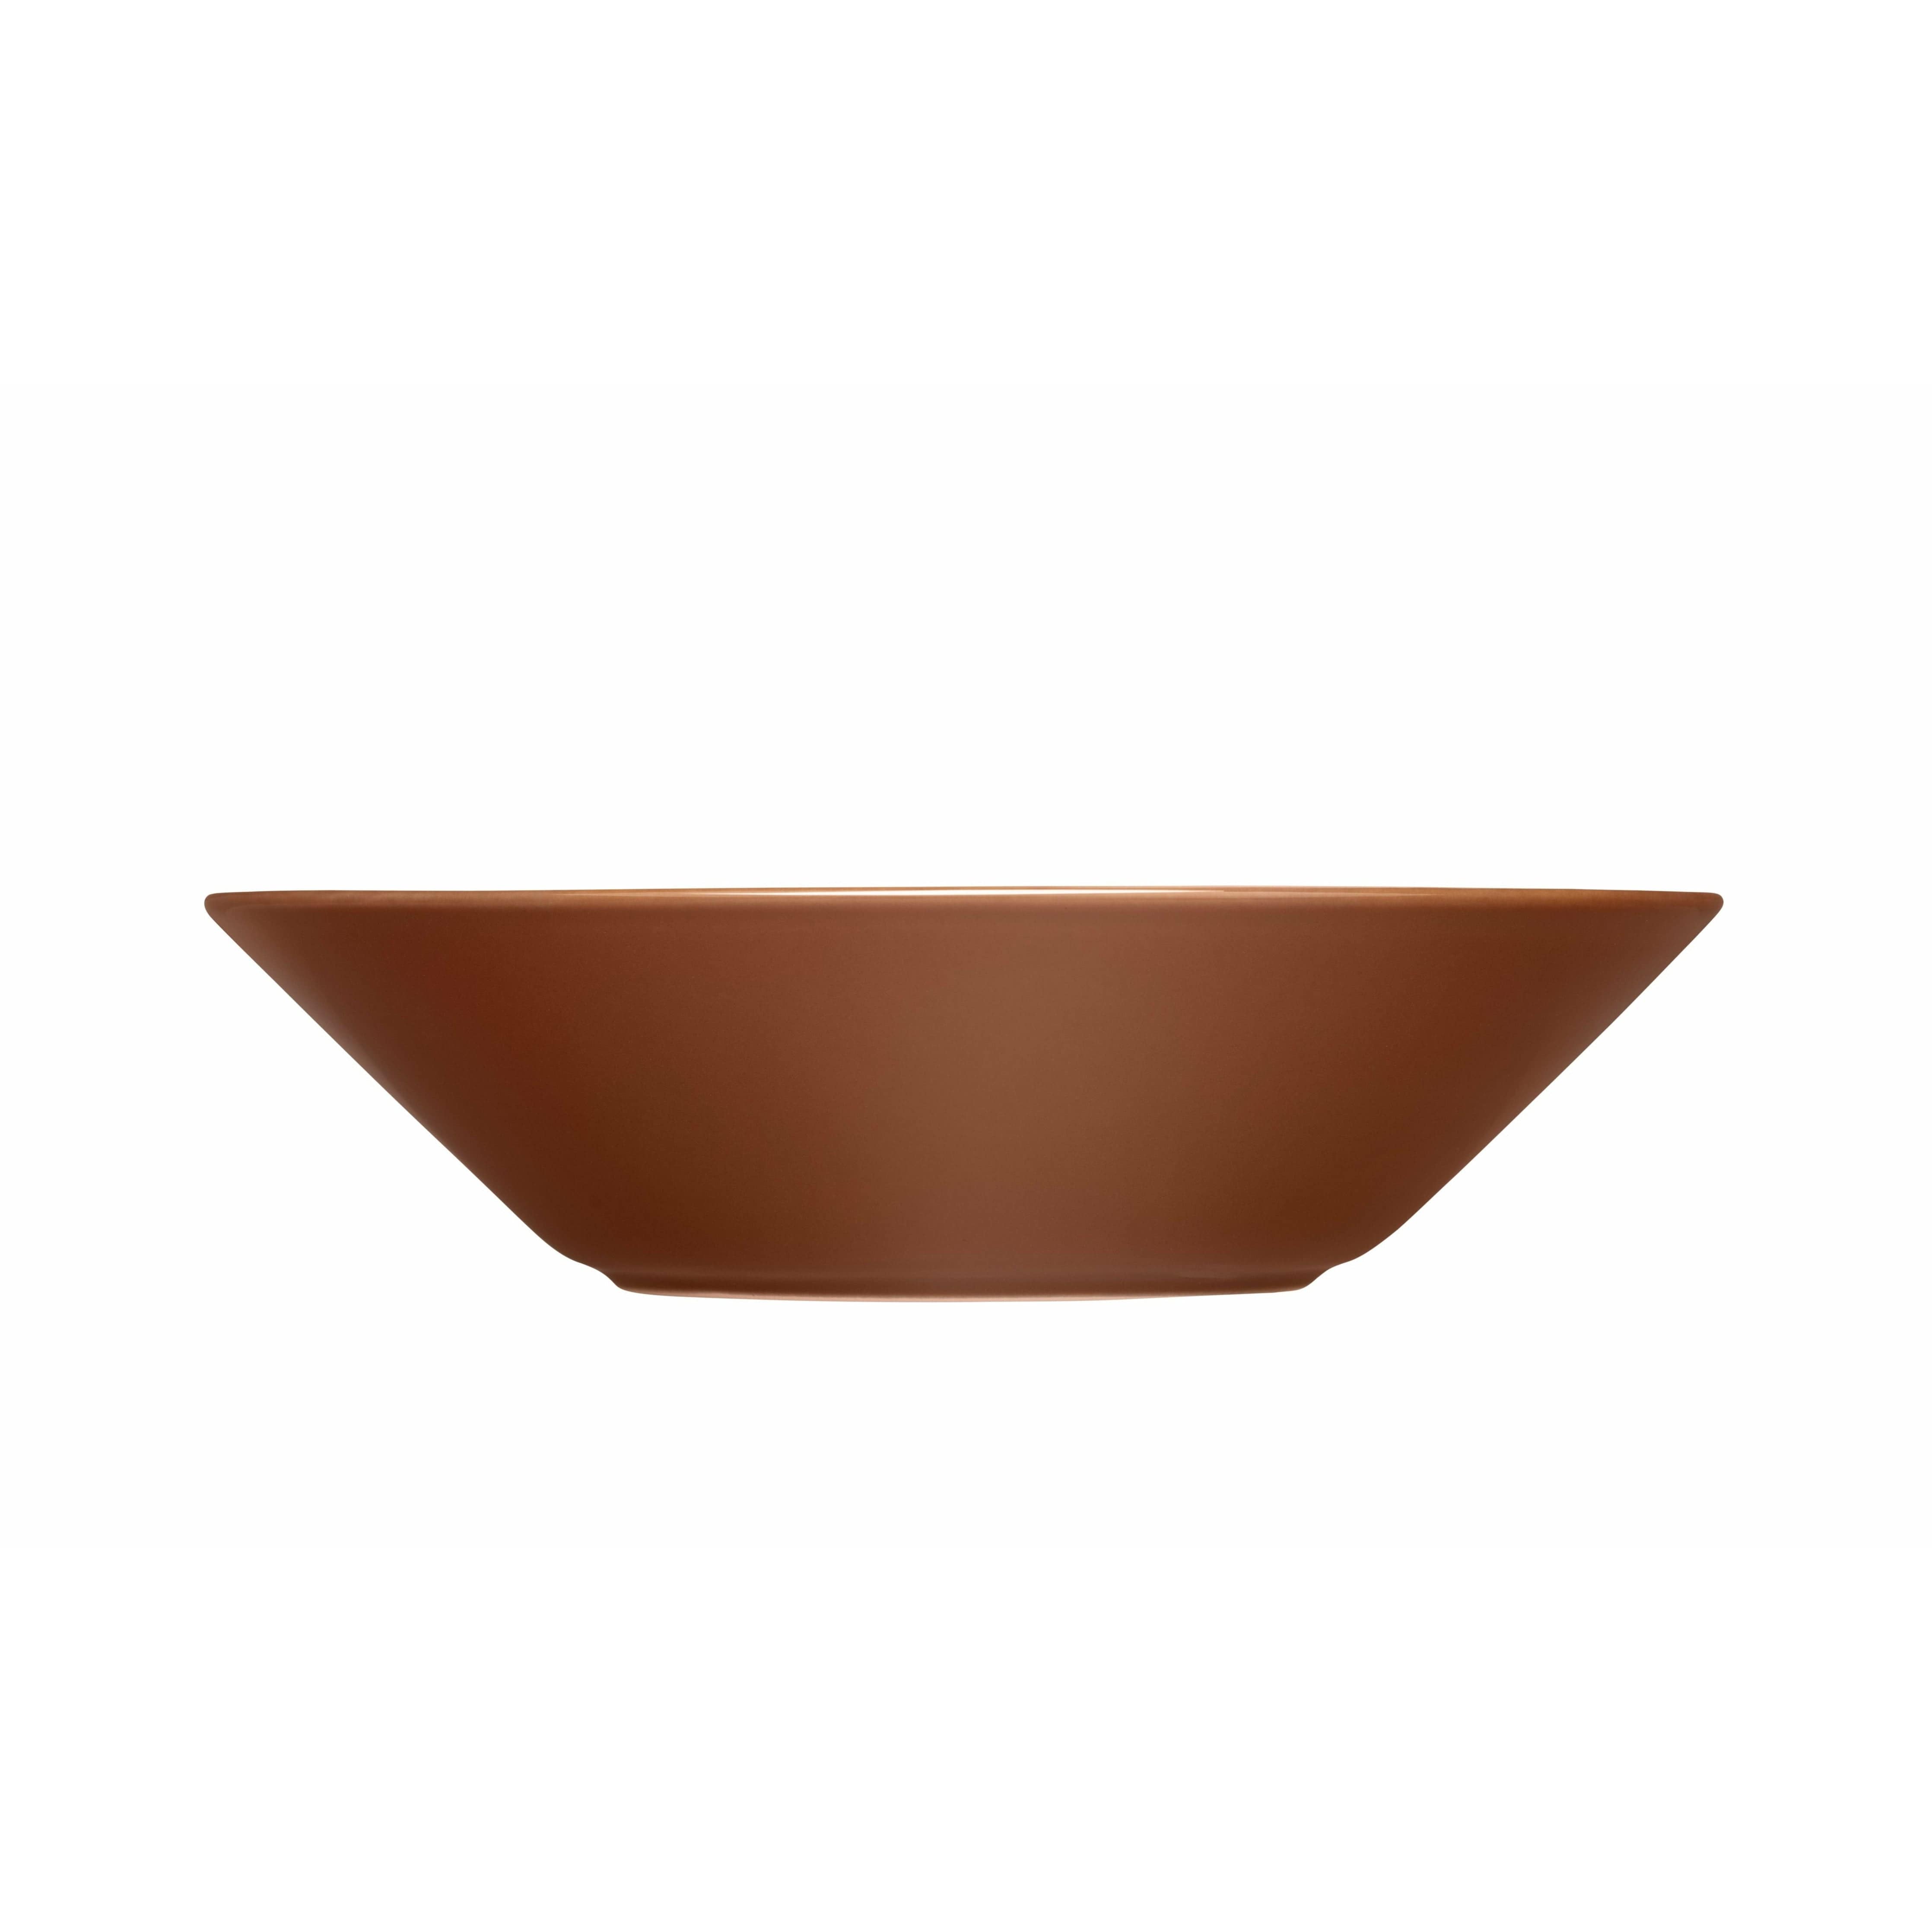 Iittala Teema djupplatta 21 cm, vintage brun